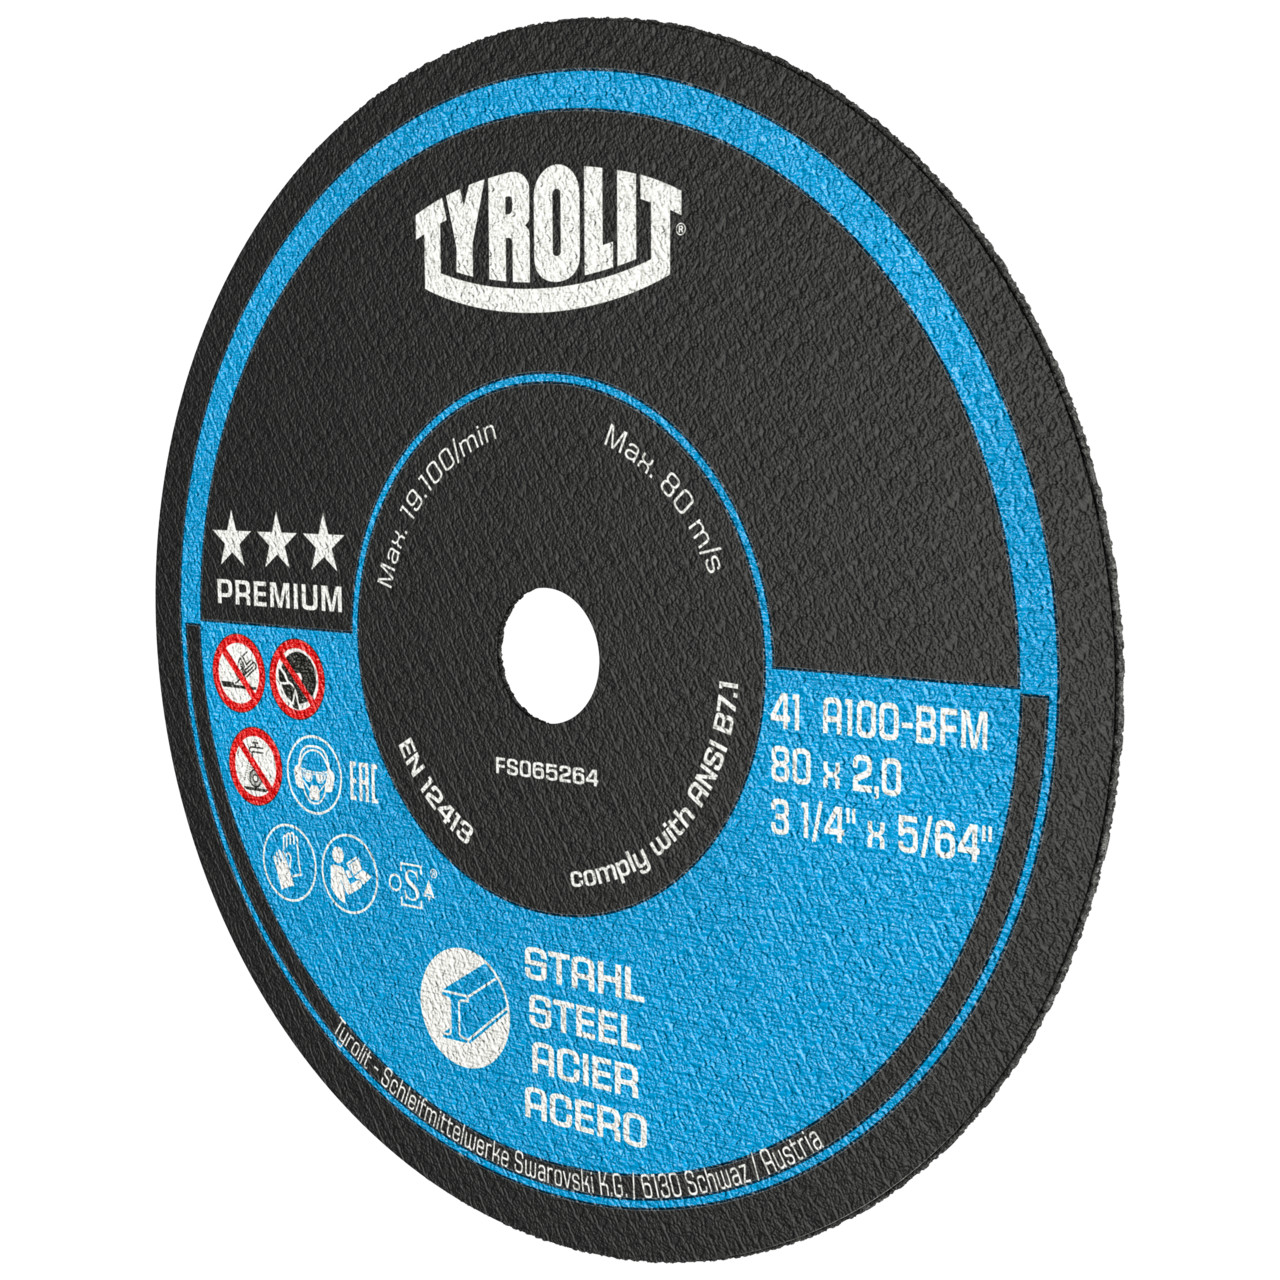 Tyrolit Discos de corte DxDxH 75x1x10 Para acero, forma: 41 - versión recta, Art. 325212